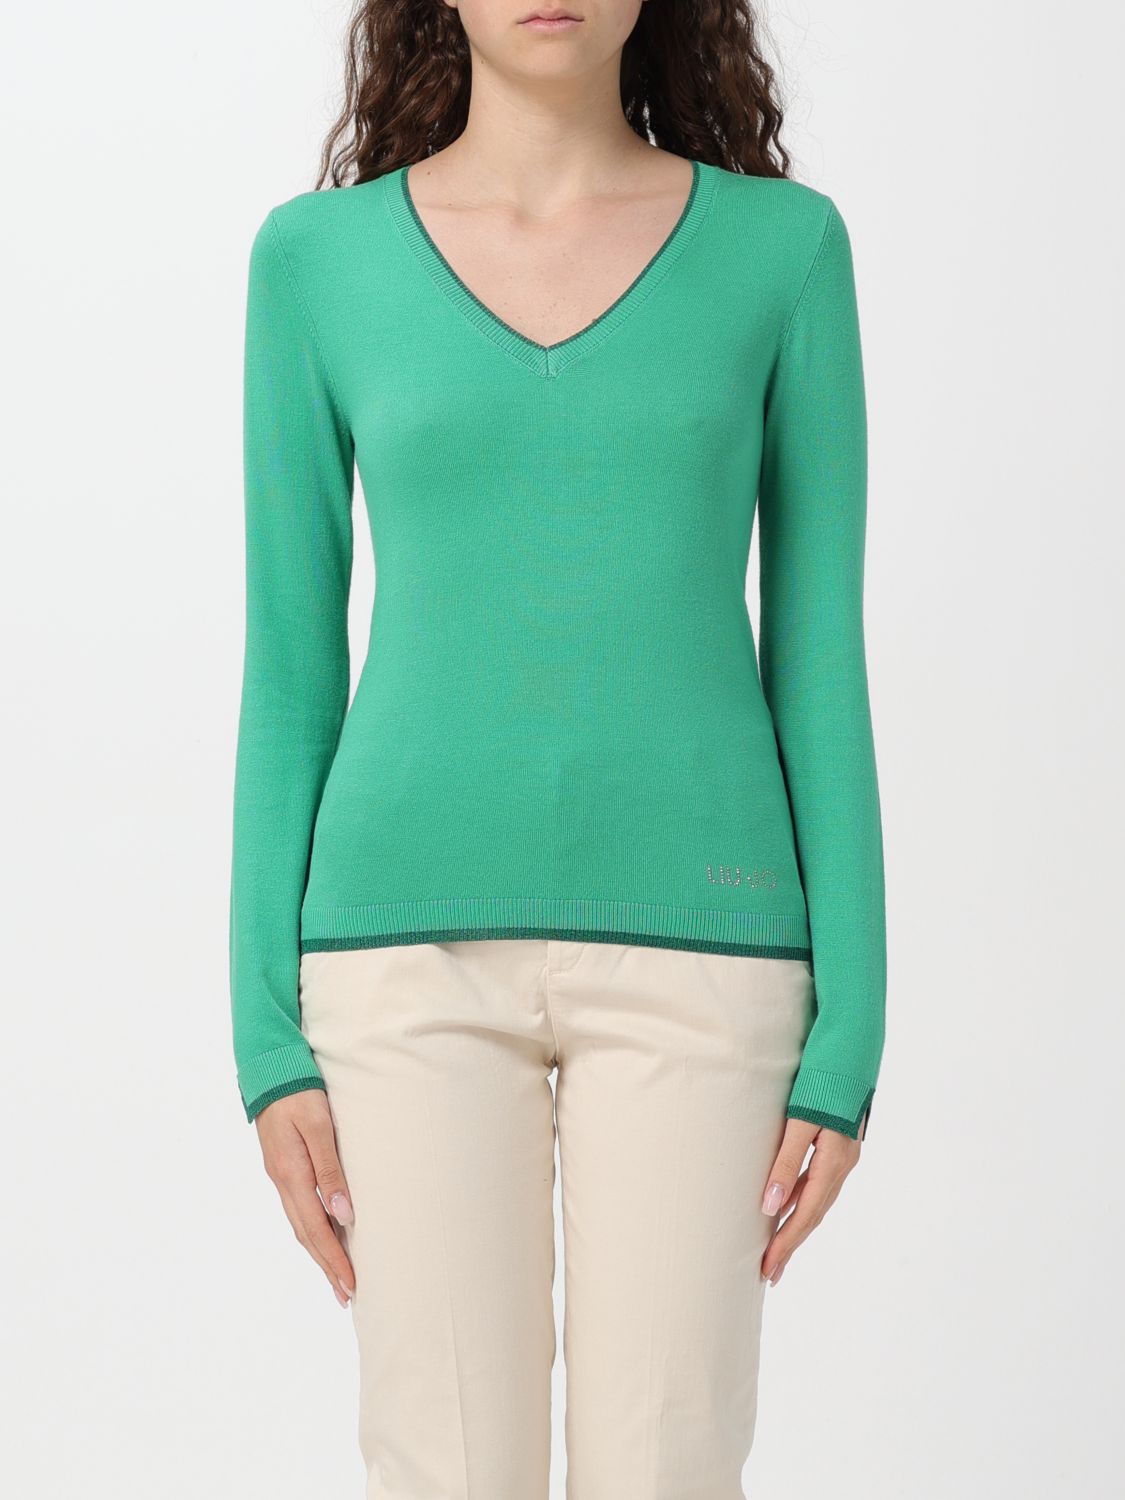 Shop Liu •jo Sweater Liu Jo Woman Color Green